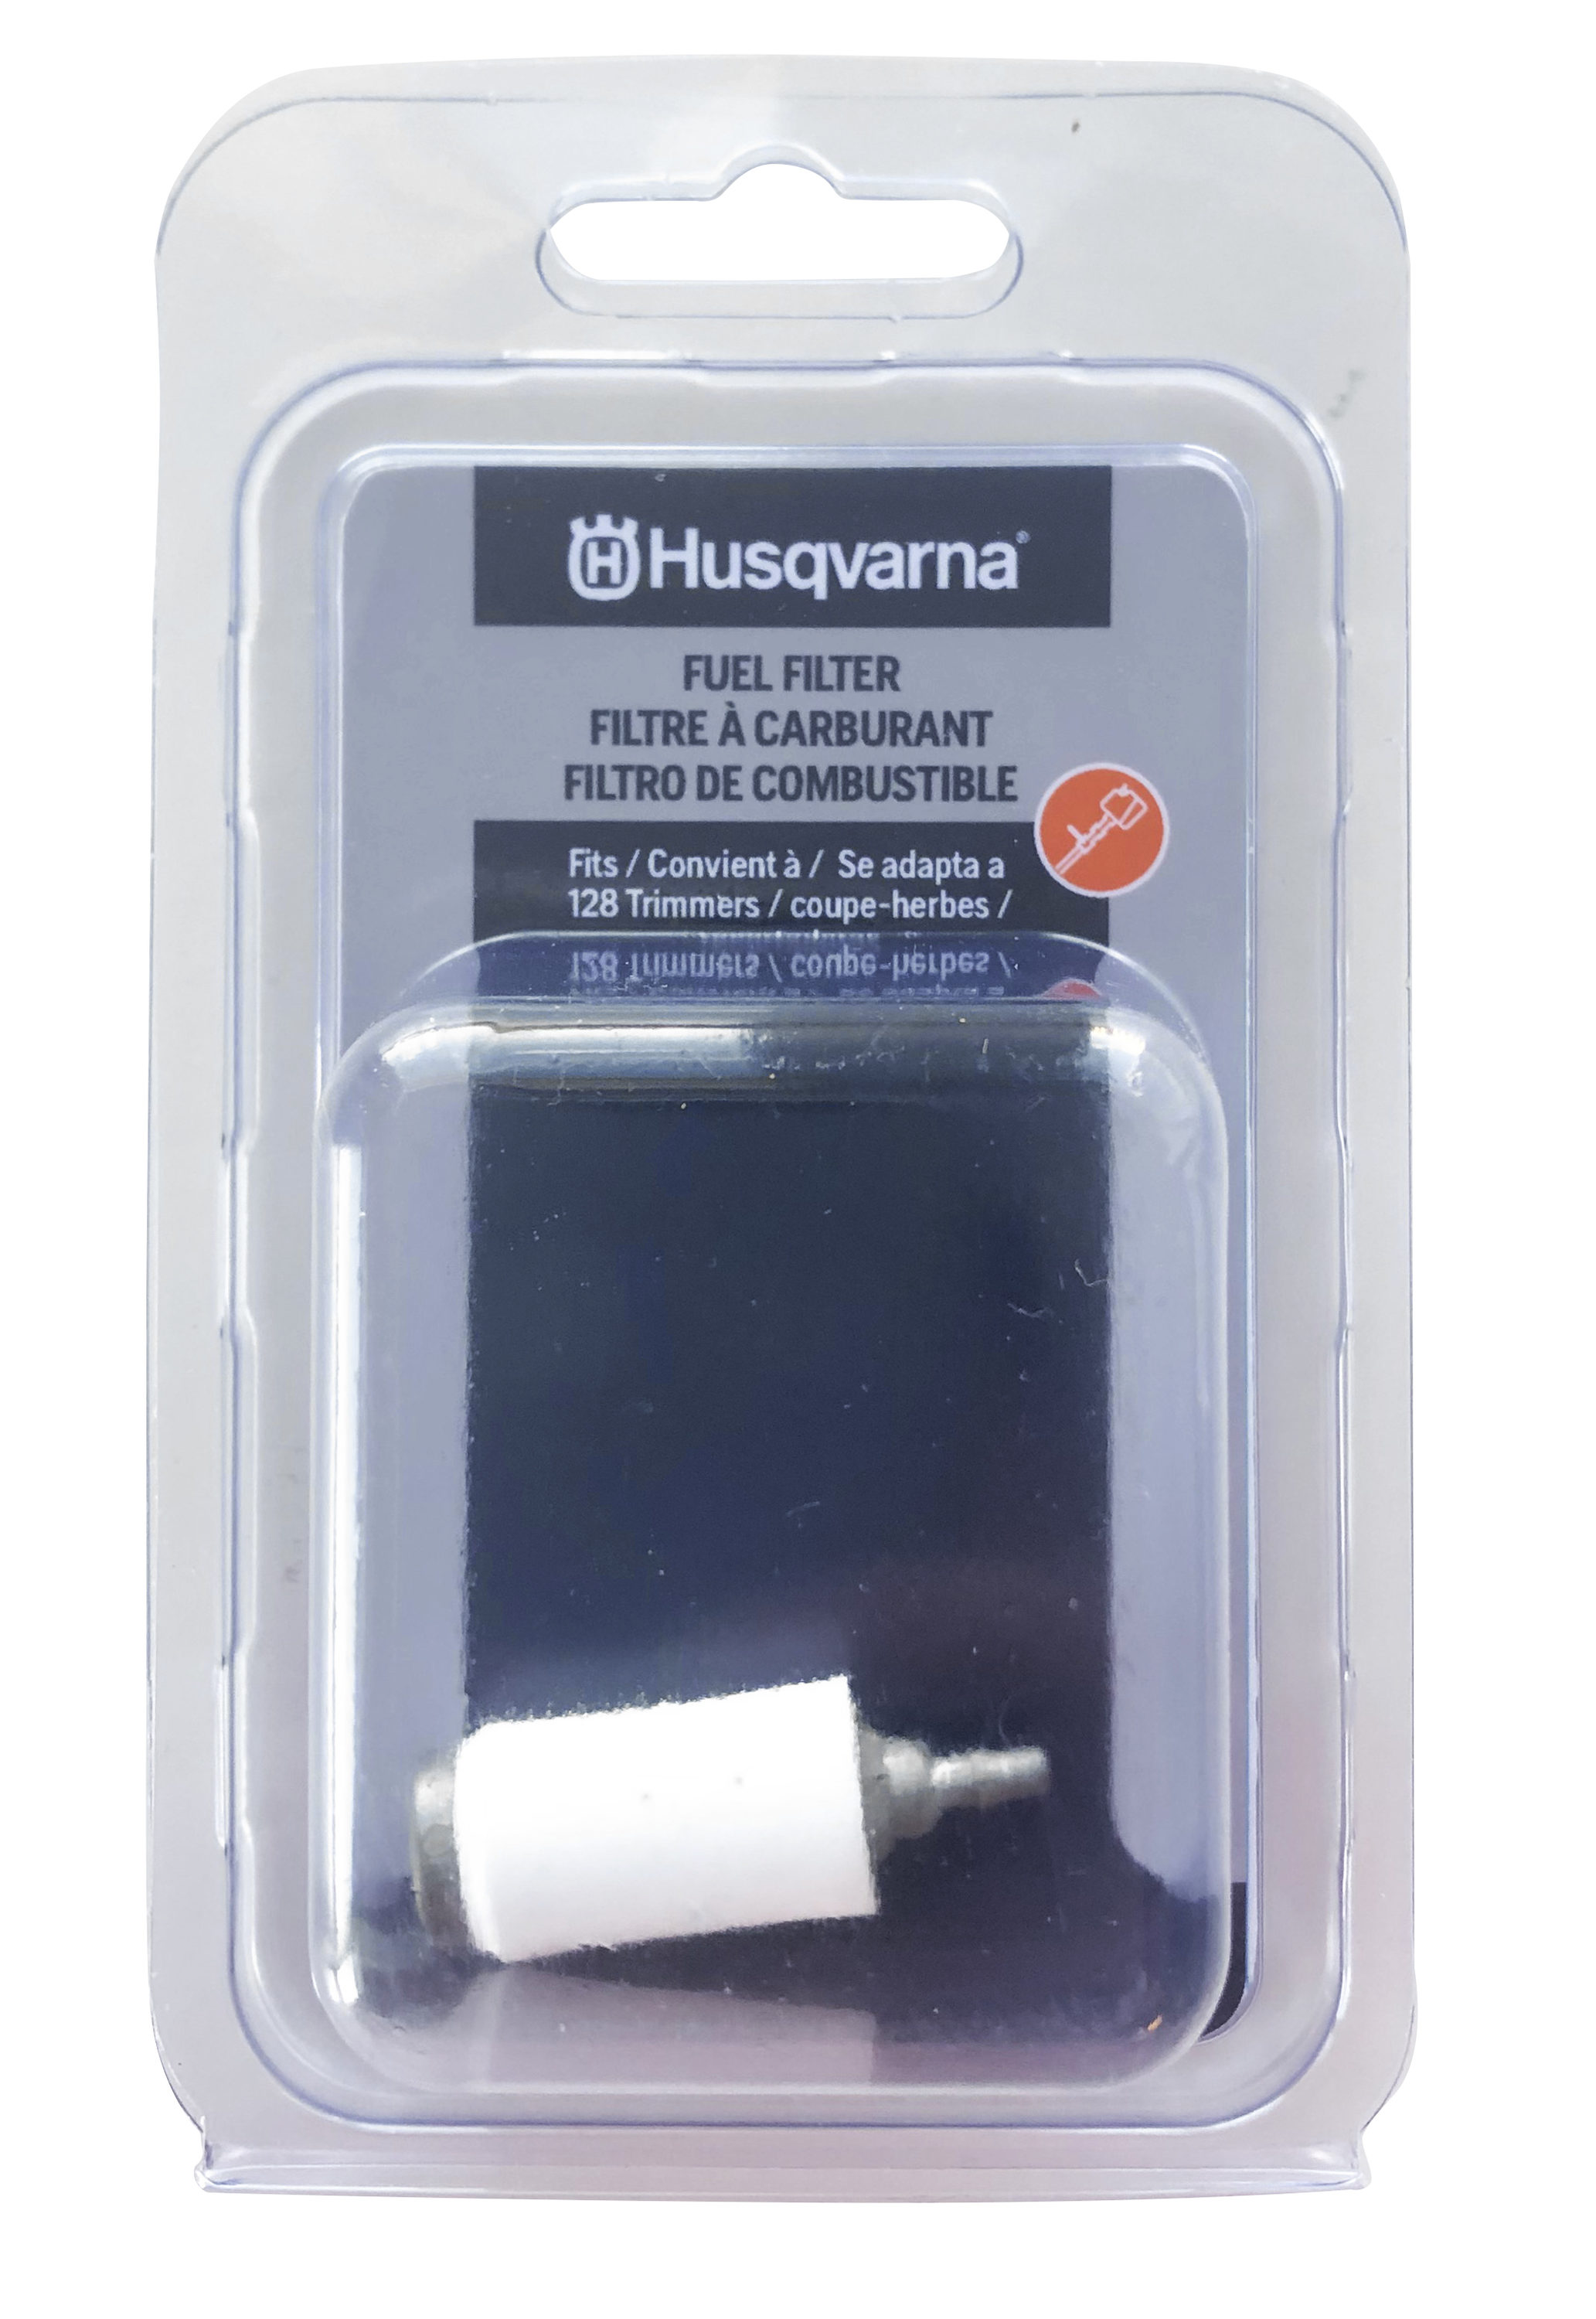 10X Fuel Filter for Husqvarna Trimmer String Line 530095646 Rep 125L 128CD NEW 